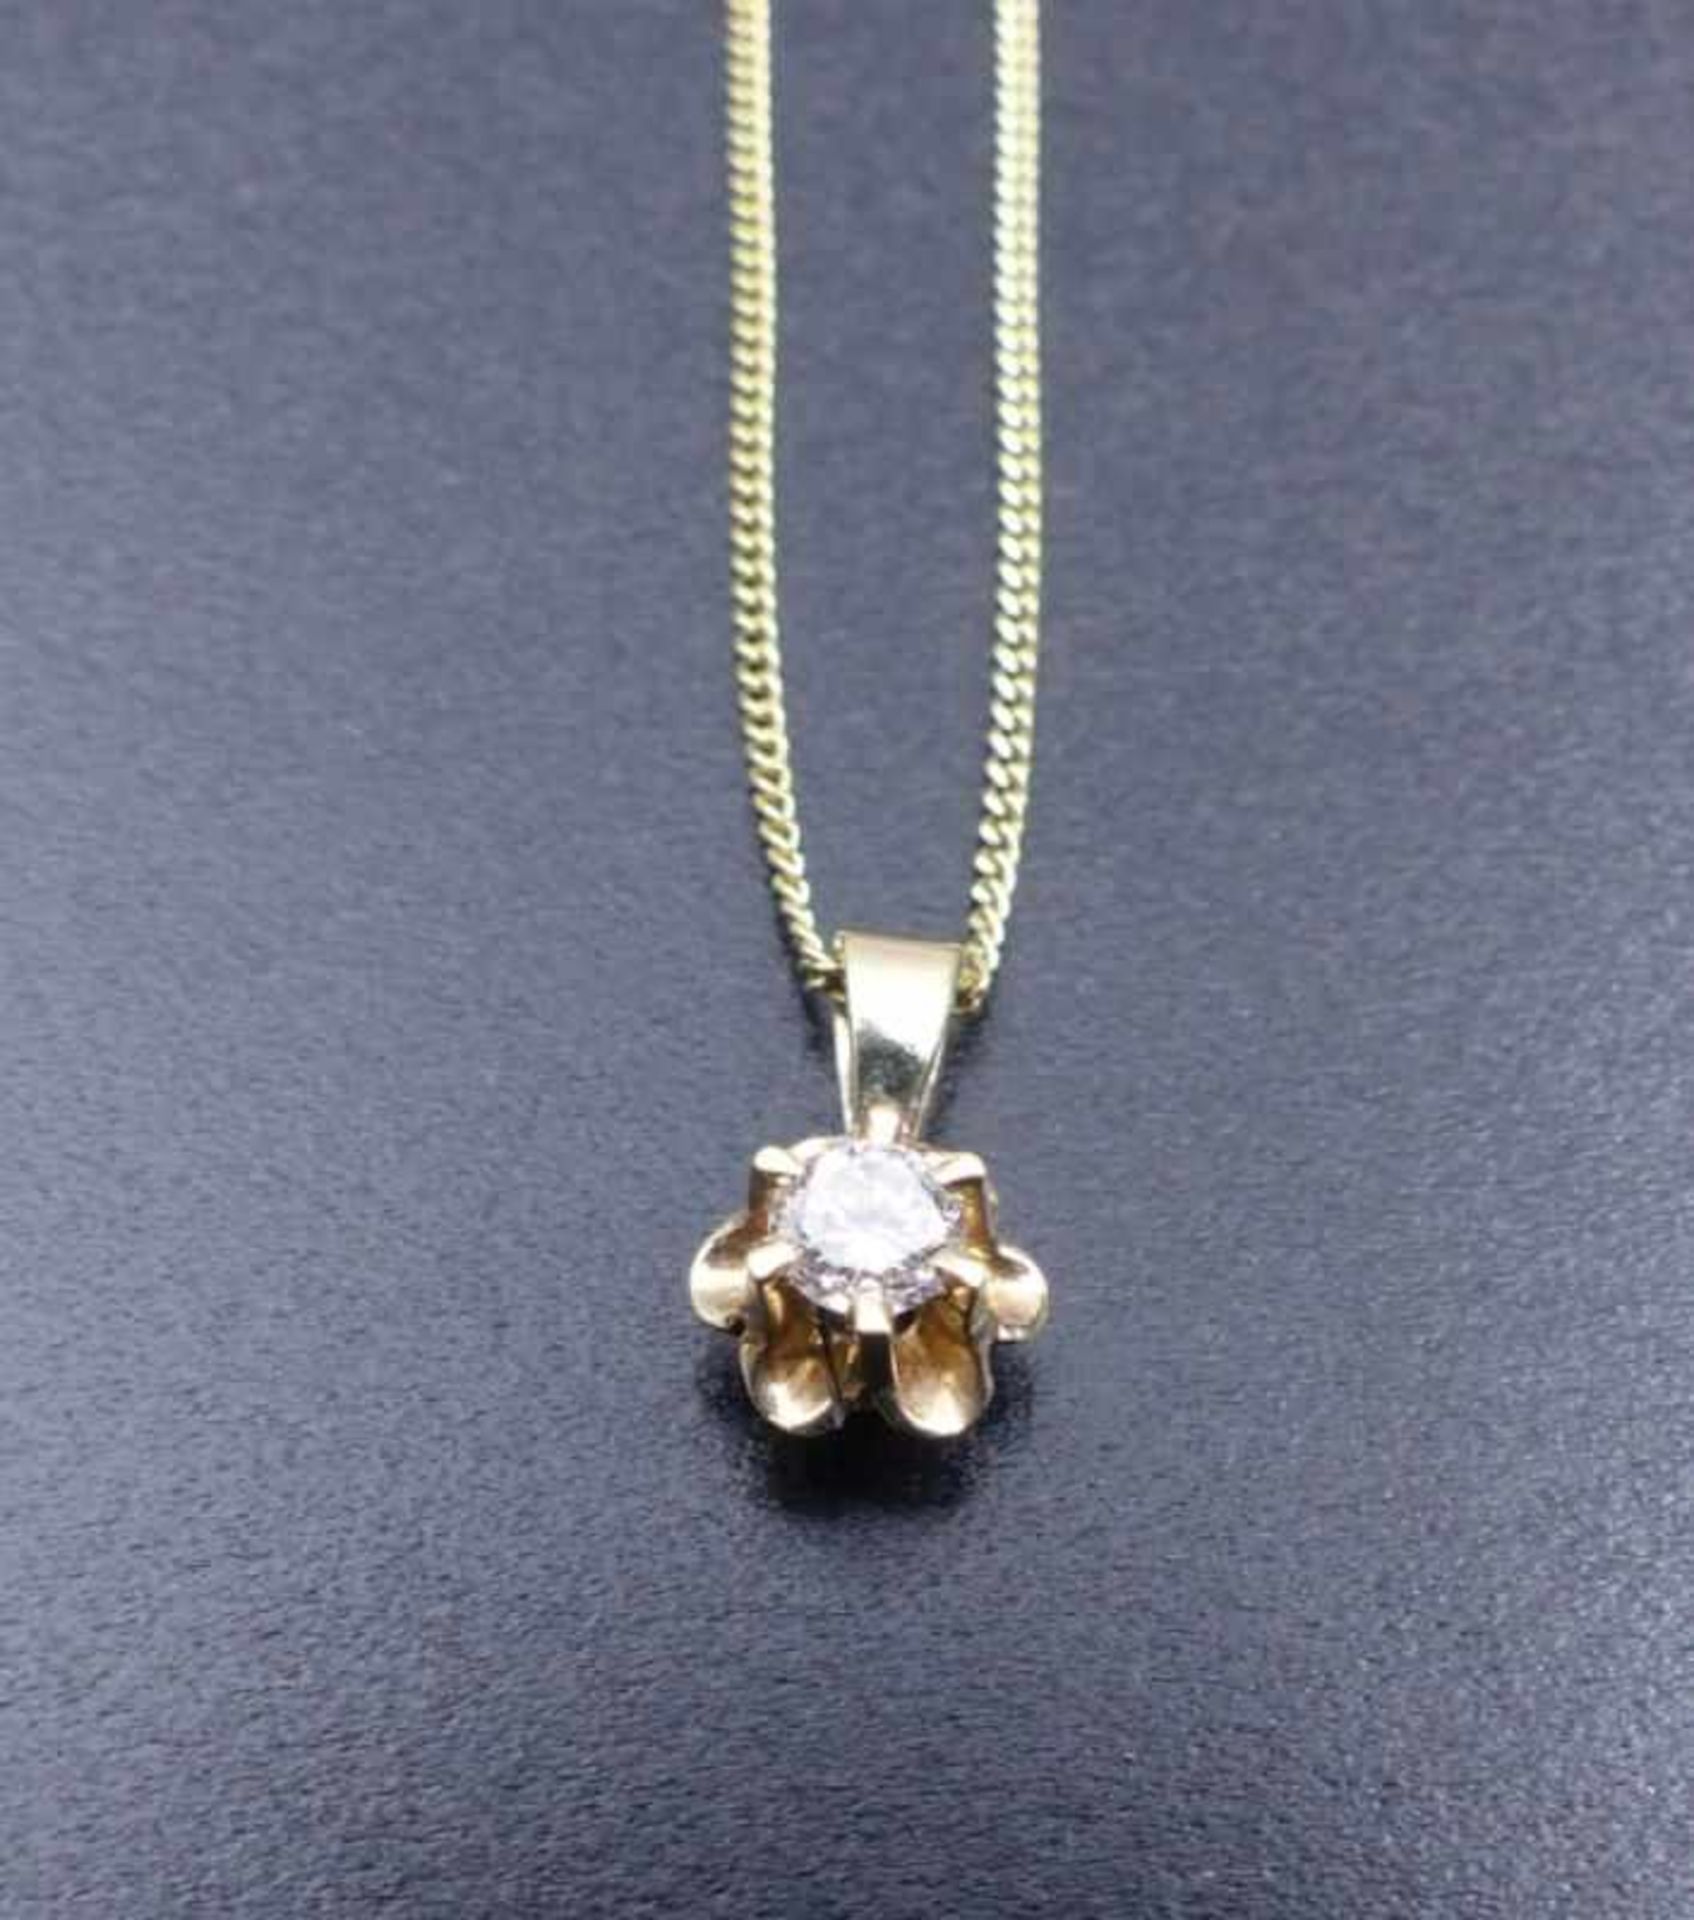 Brilliant solitaire pendant with chain